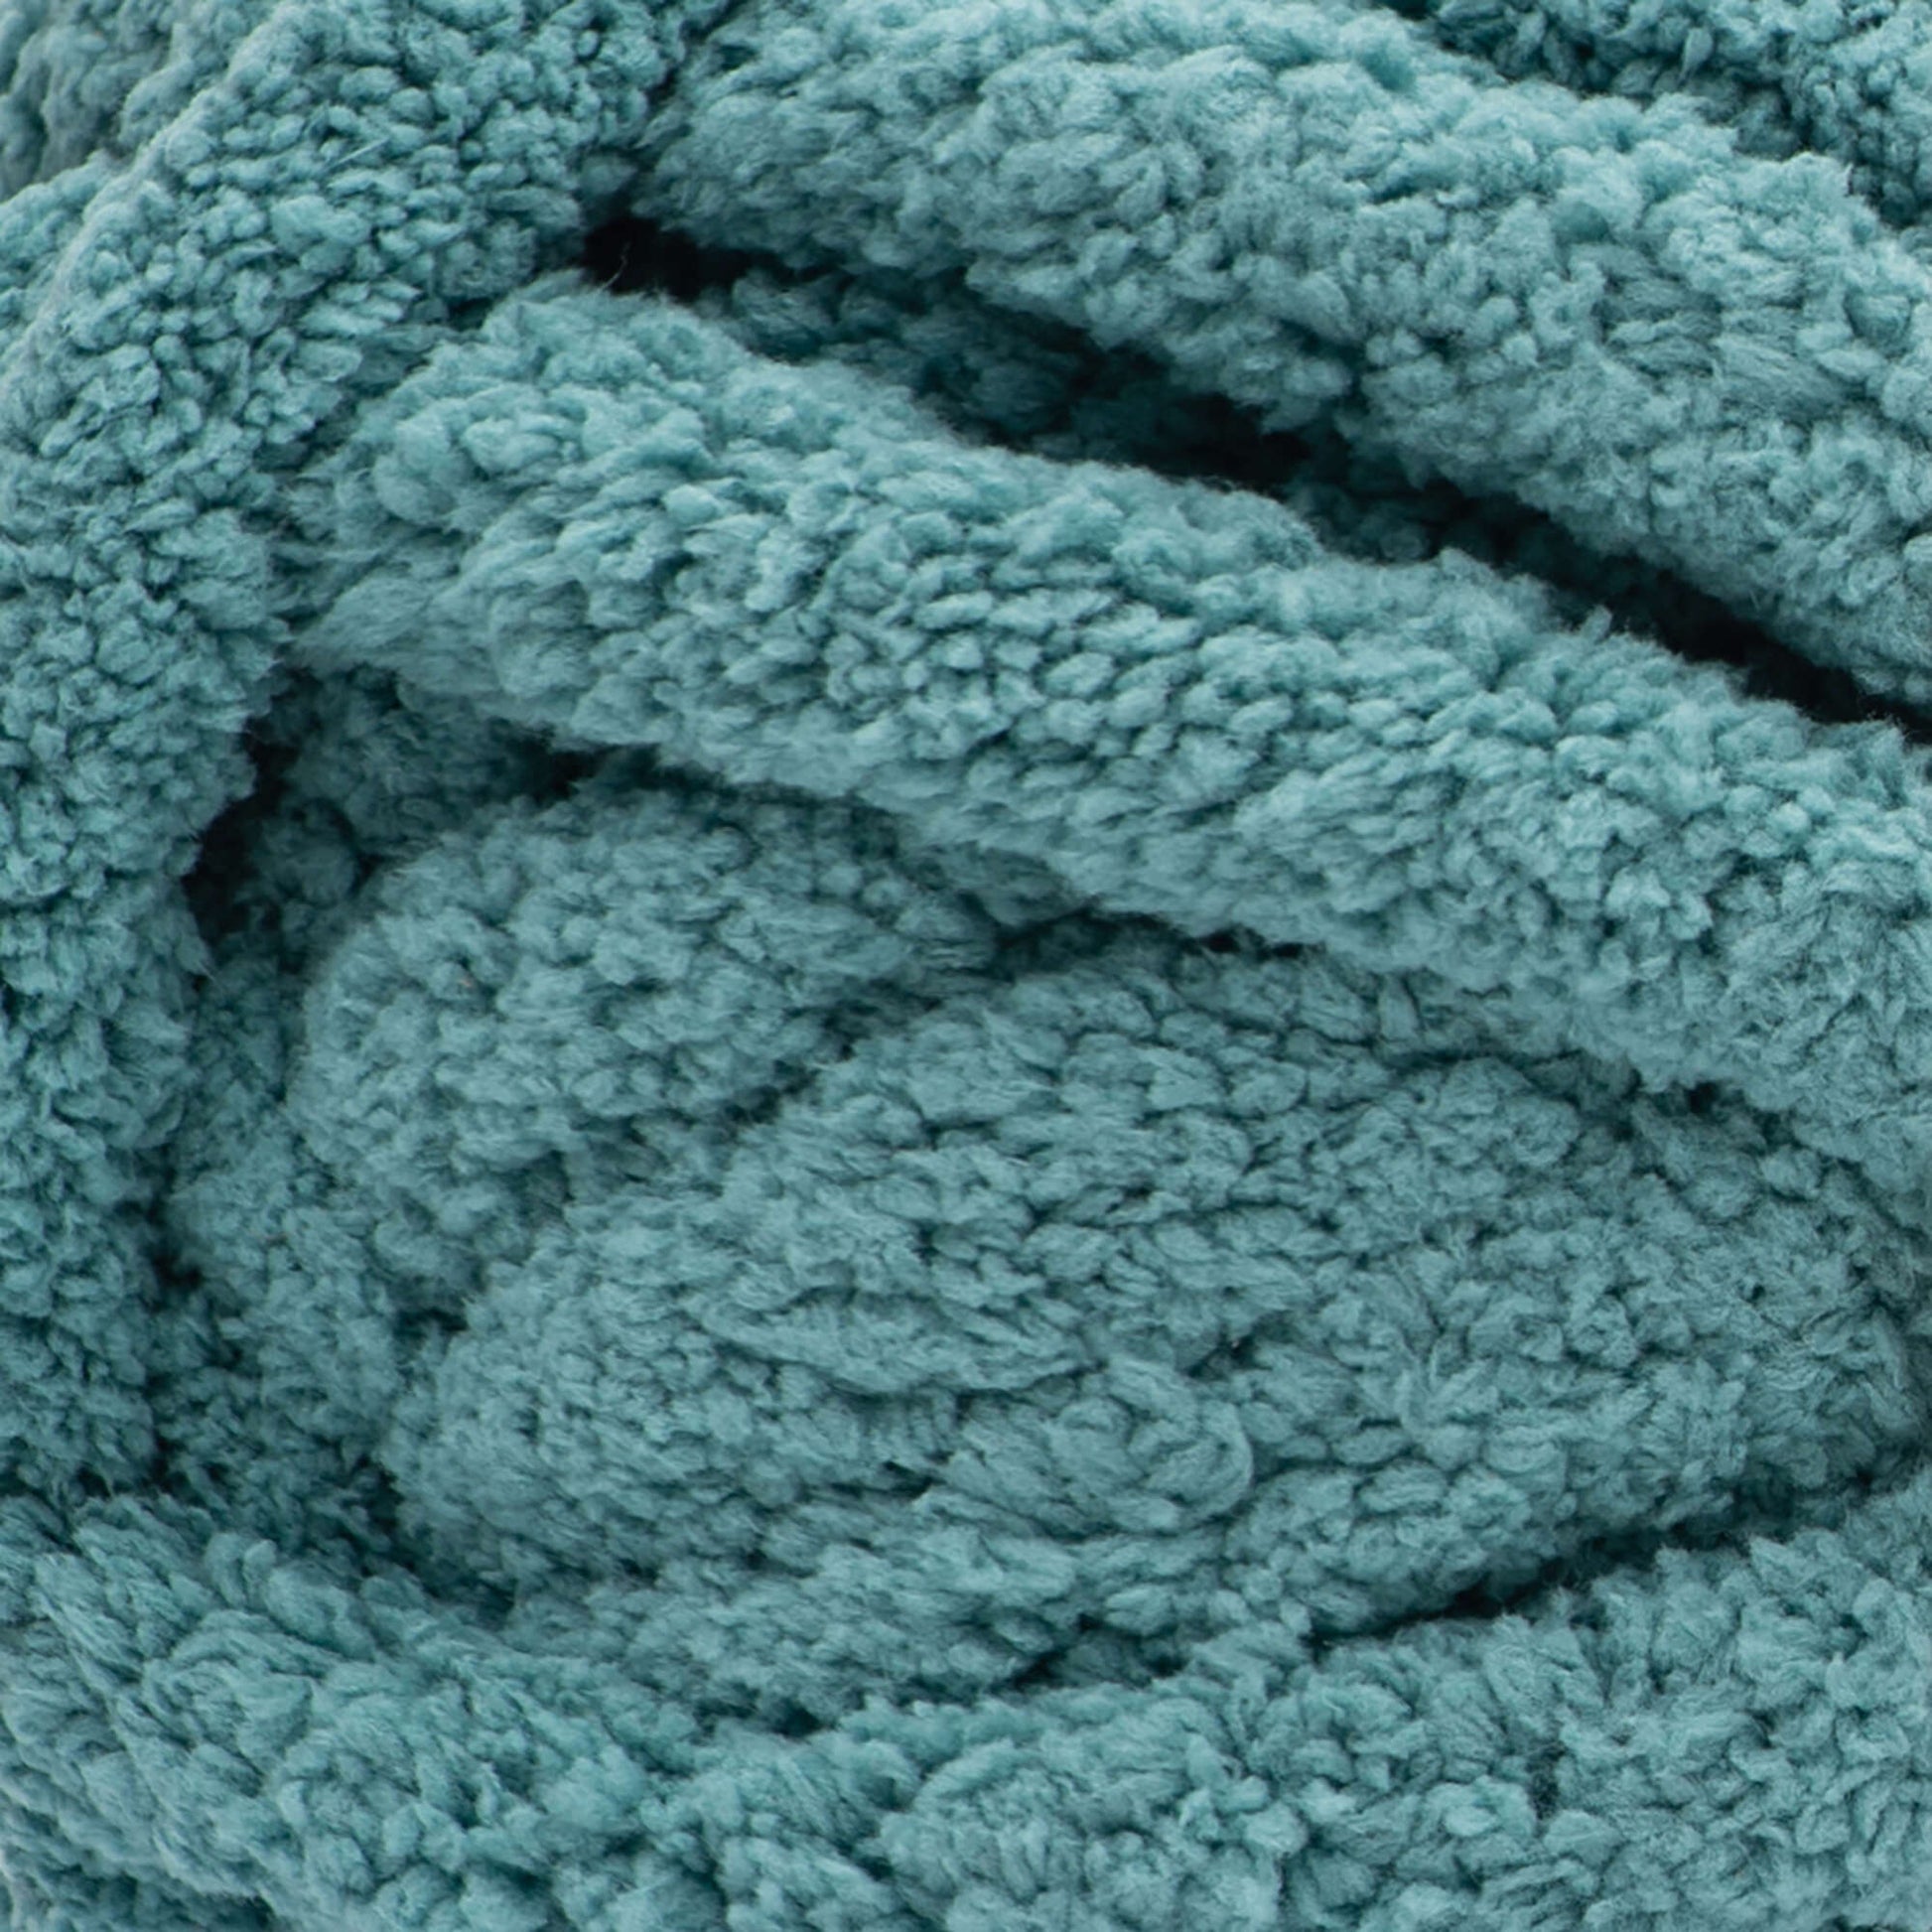 Bernat Blanket Big Yarn (300g/10.5oz) Frosted Green